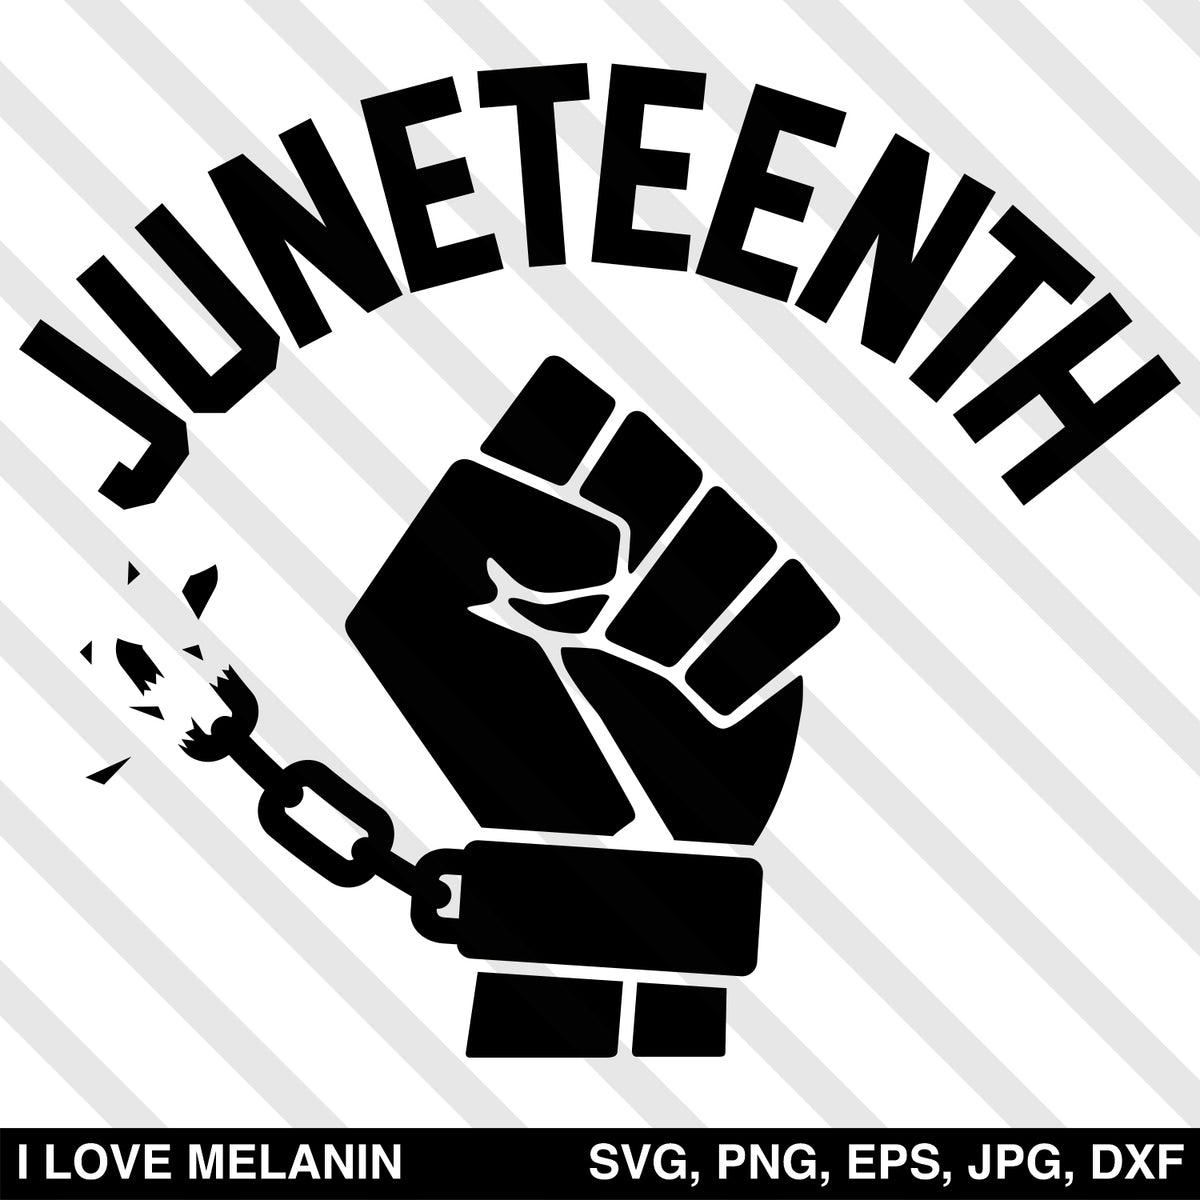 Juneteenth Freedom Fist SVG - I Love Melanin